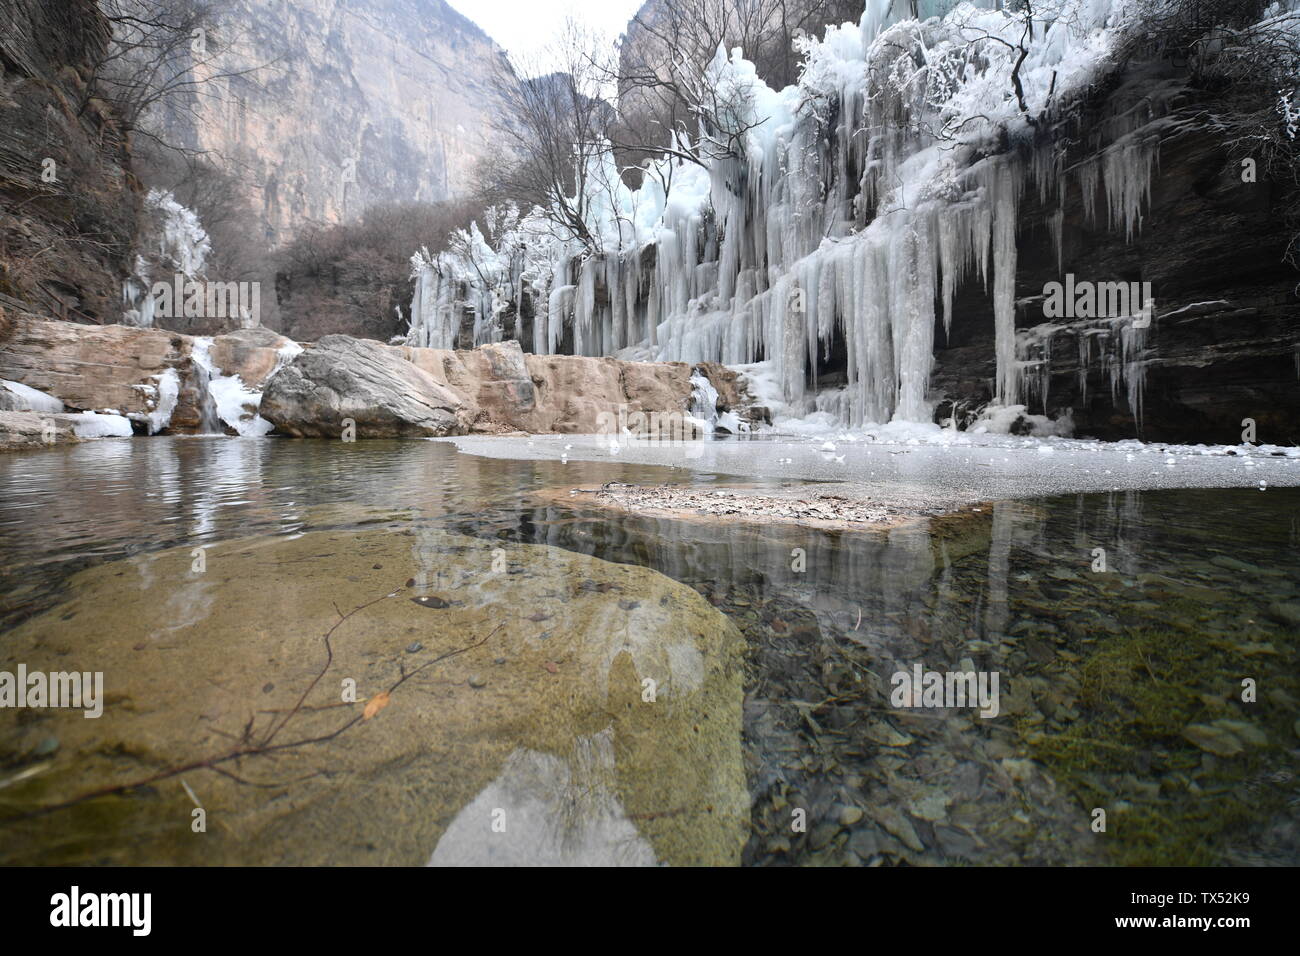 190624) -- ZHENGZHOU, June 24, 2019 (Xinhua) Photo taken on Jan. 9, shows the frozen waterfalls at Yuntai Mountain scenic area in a city in central China's Henan Province.